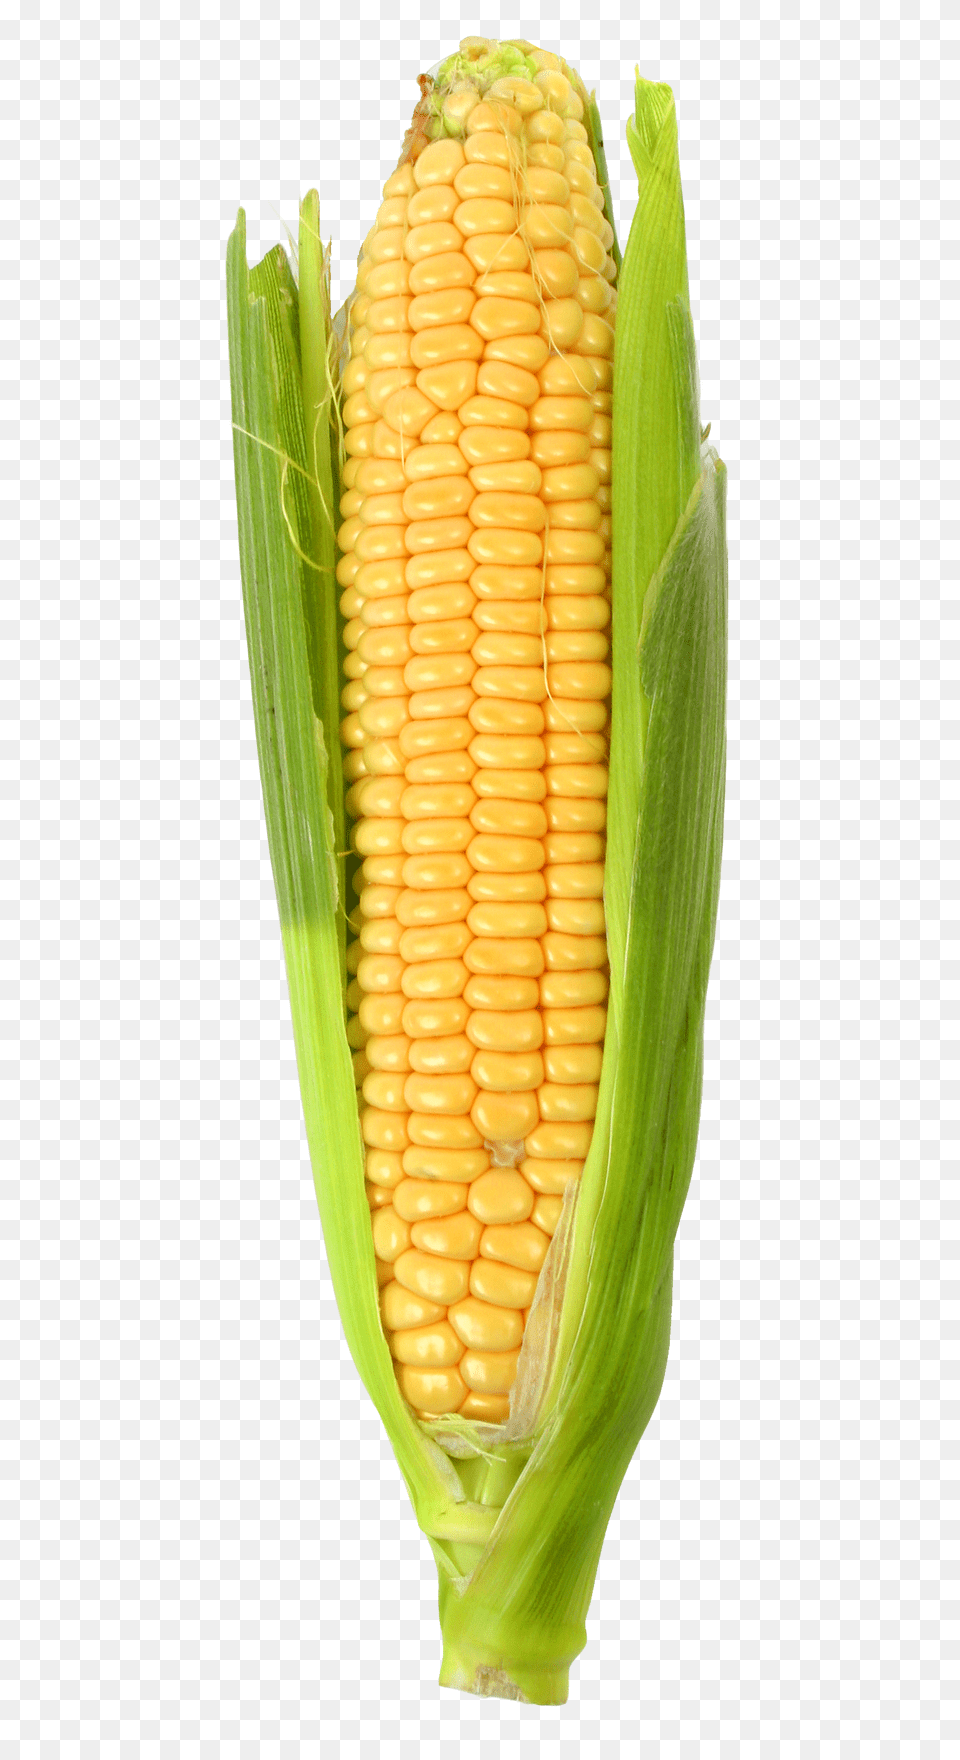 Corn Image1, Food, Grain, Plant, Produce Png Image